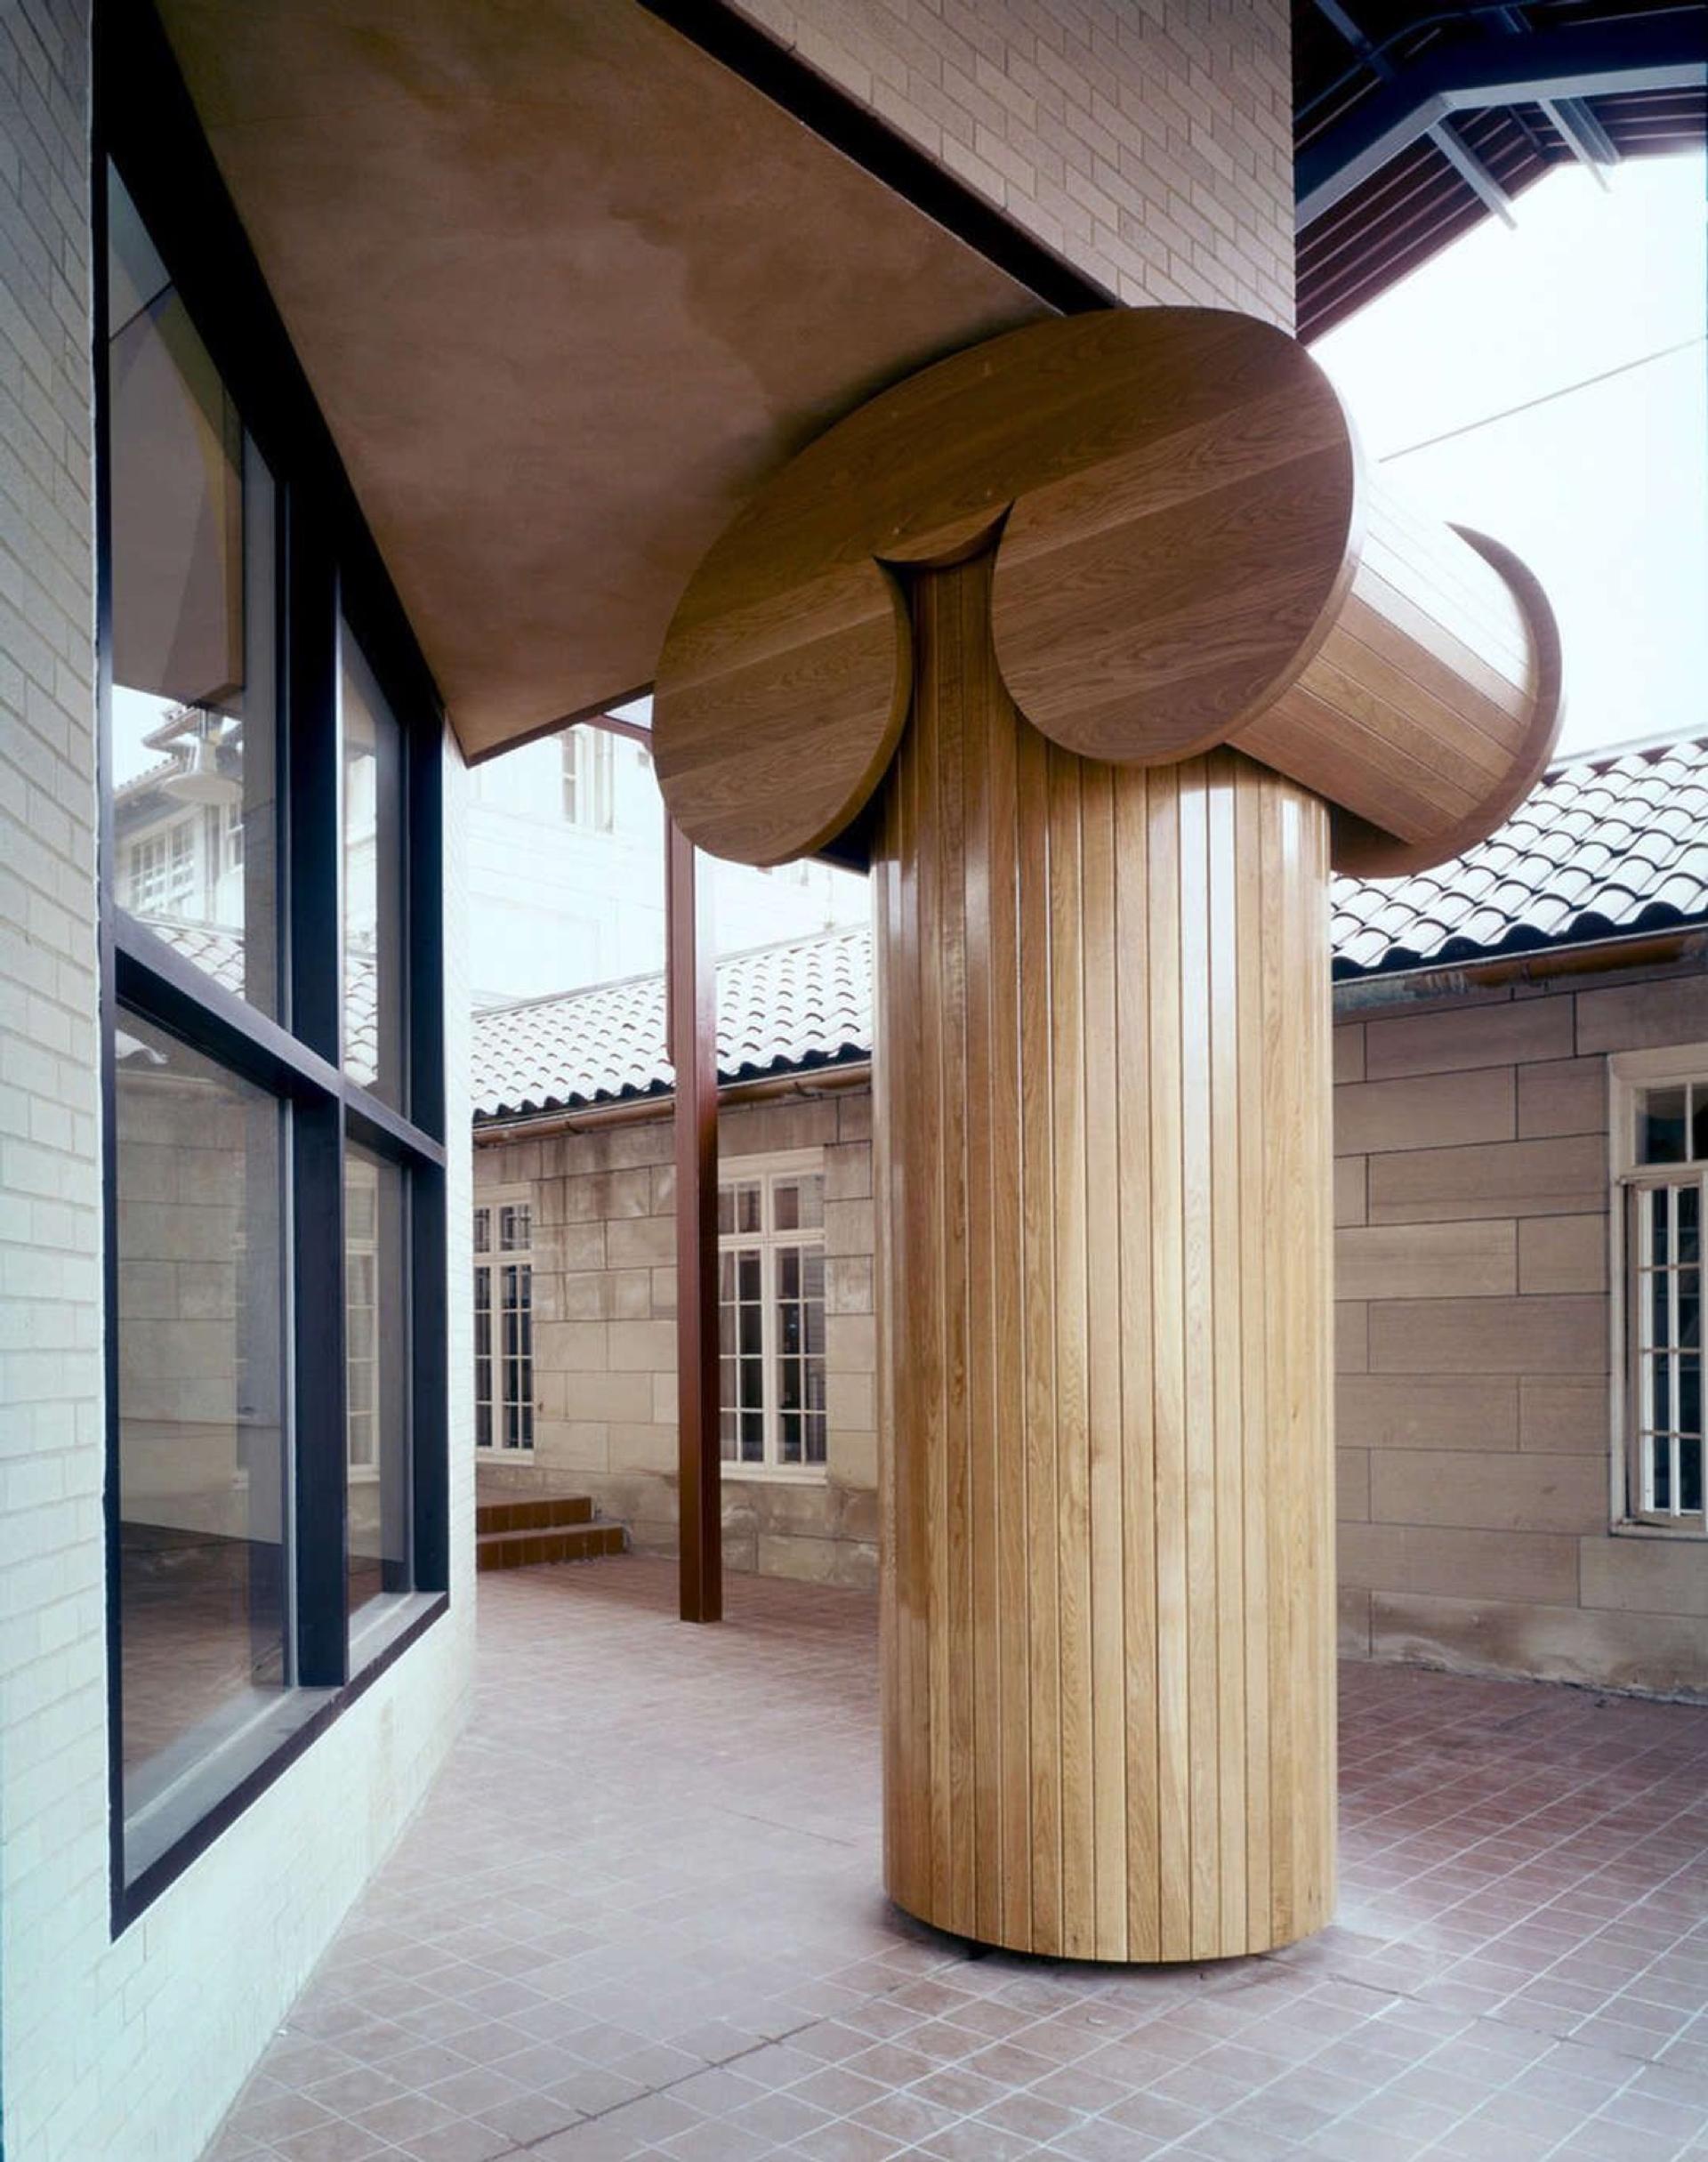 Robert Venturi, Denise Scott Brown. Column at Oberlin College, 1977.